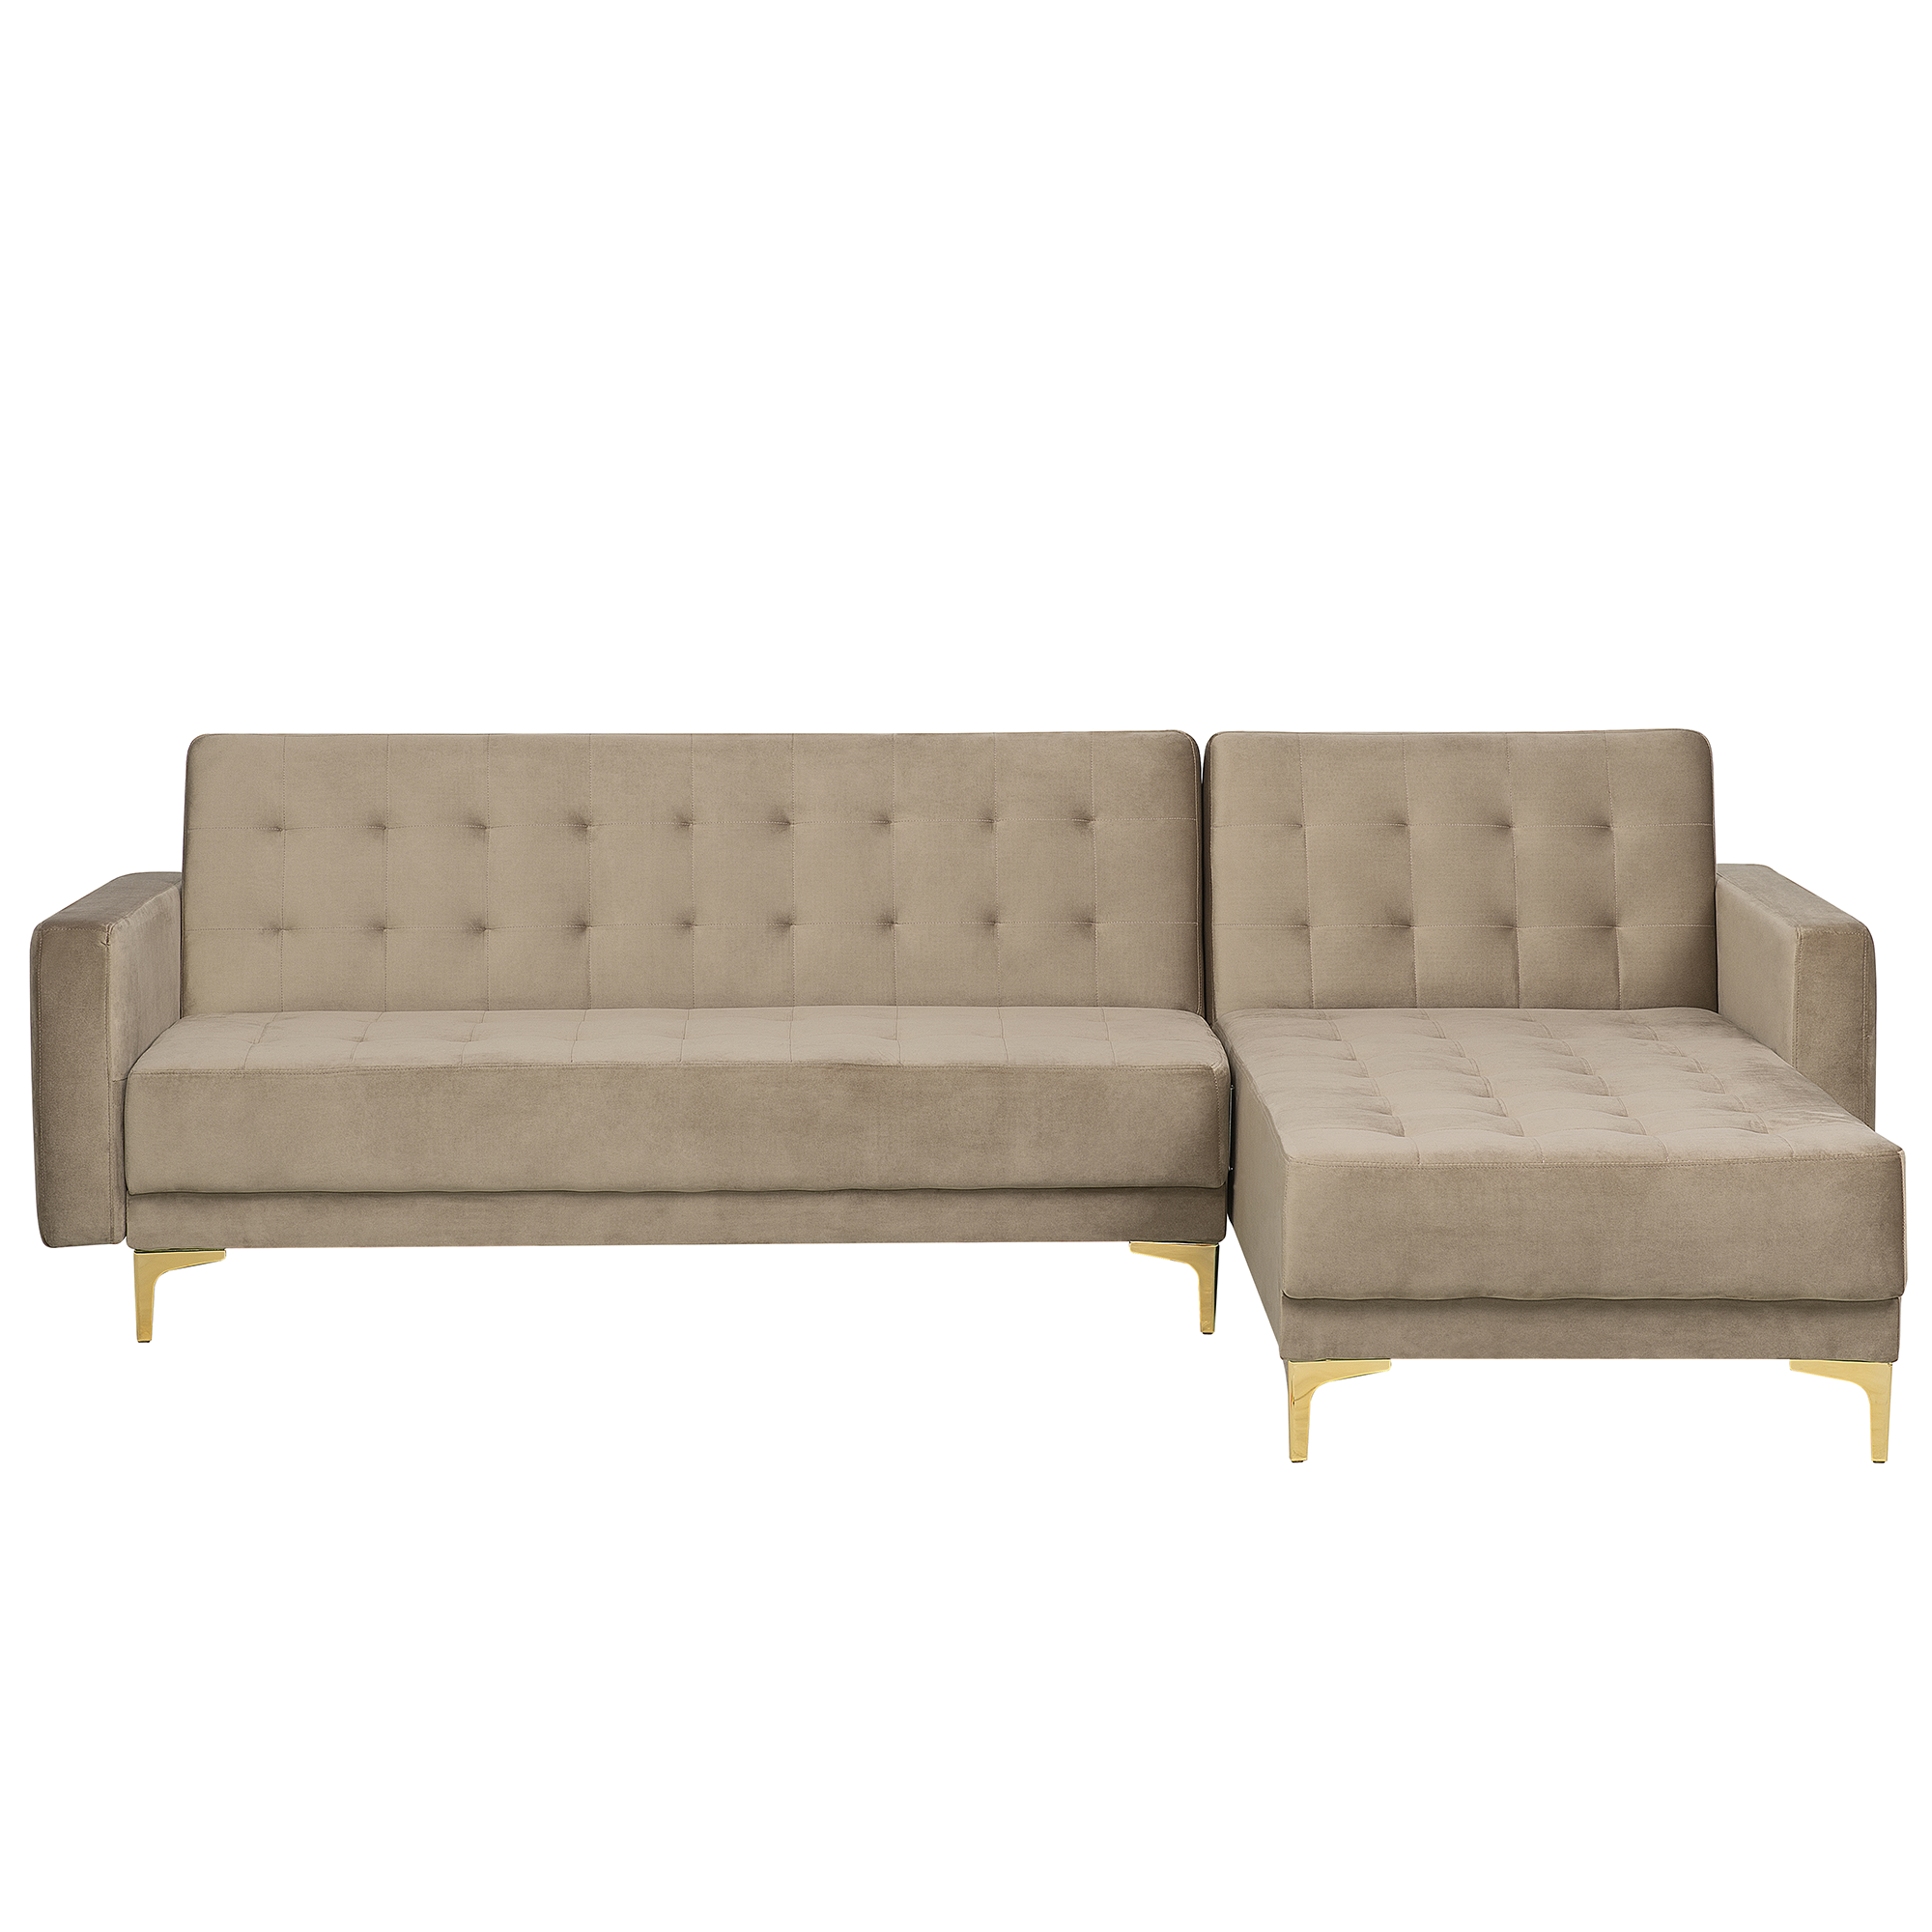 Beliani Corner Sofa Bed Beige Velvet Tufted Fabric Modern L-Shaped Modular 4 Seater Left Hand Chaise Longue